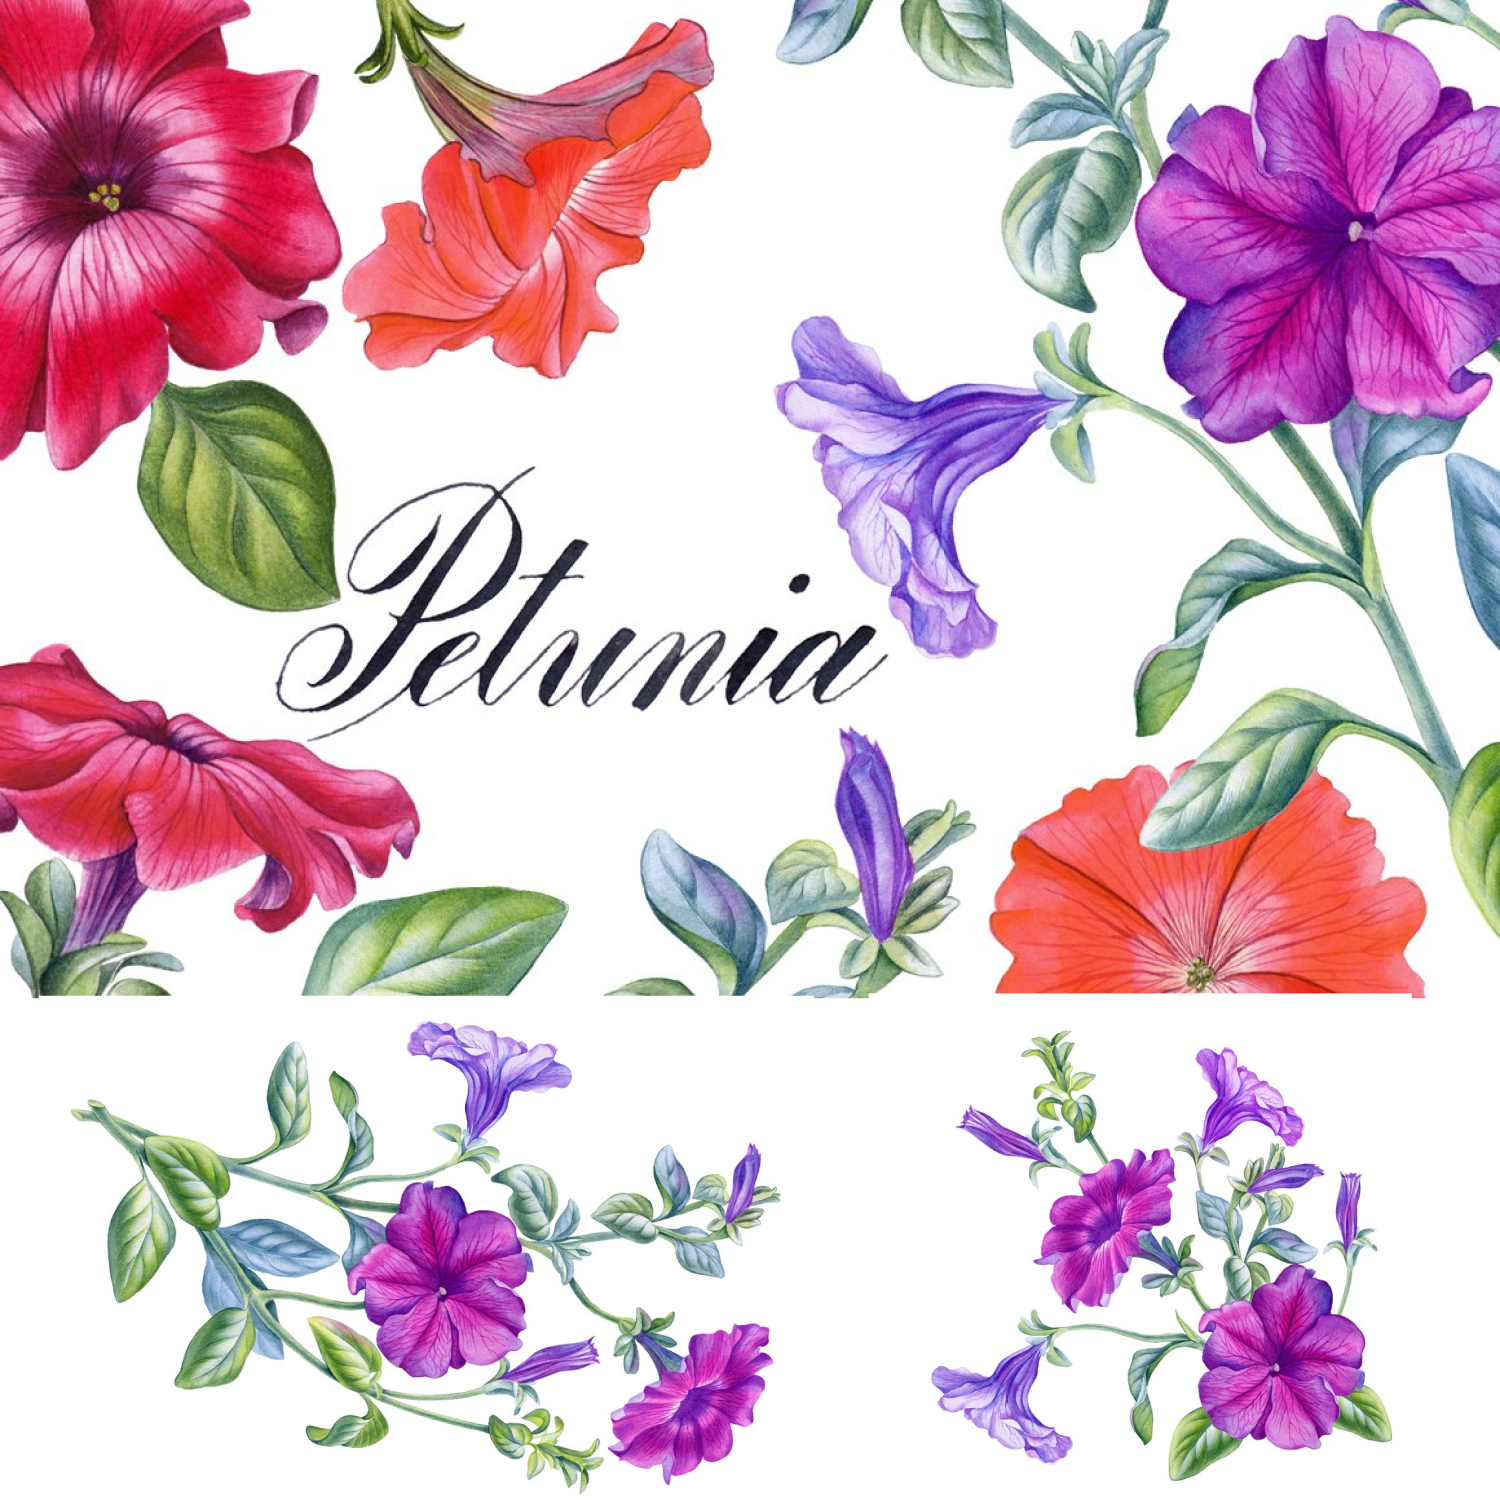 Beautiful prints on colorful petunias.